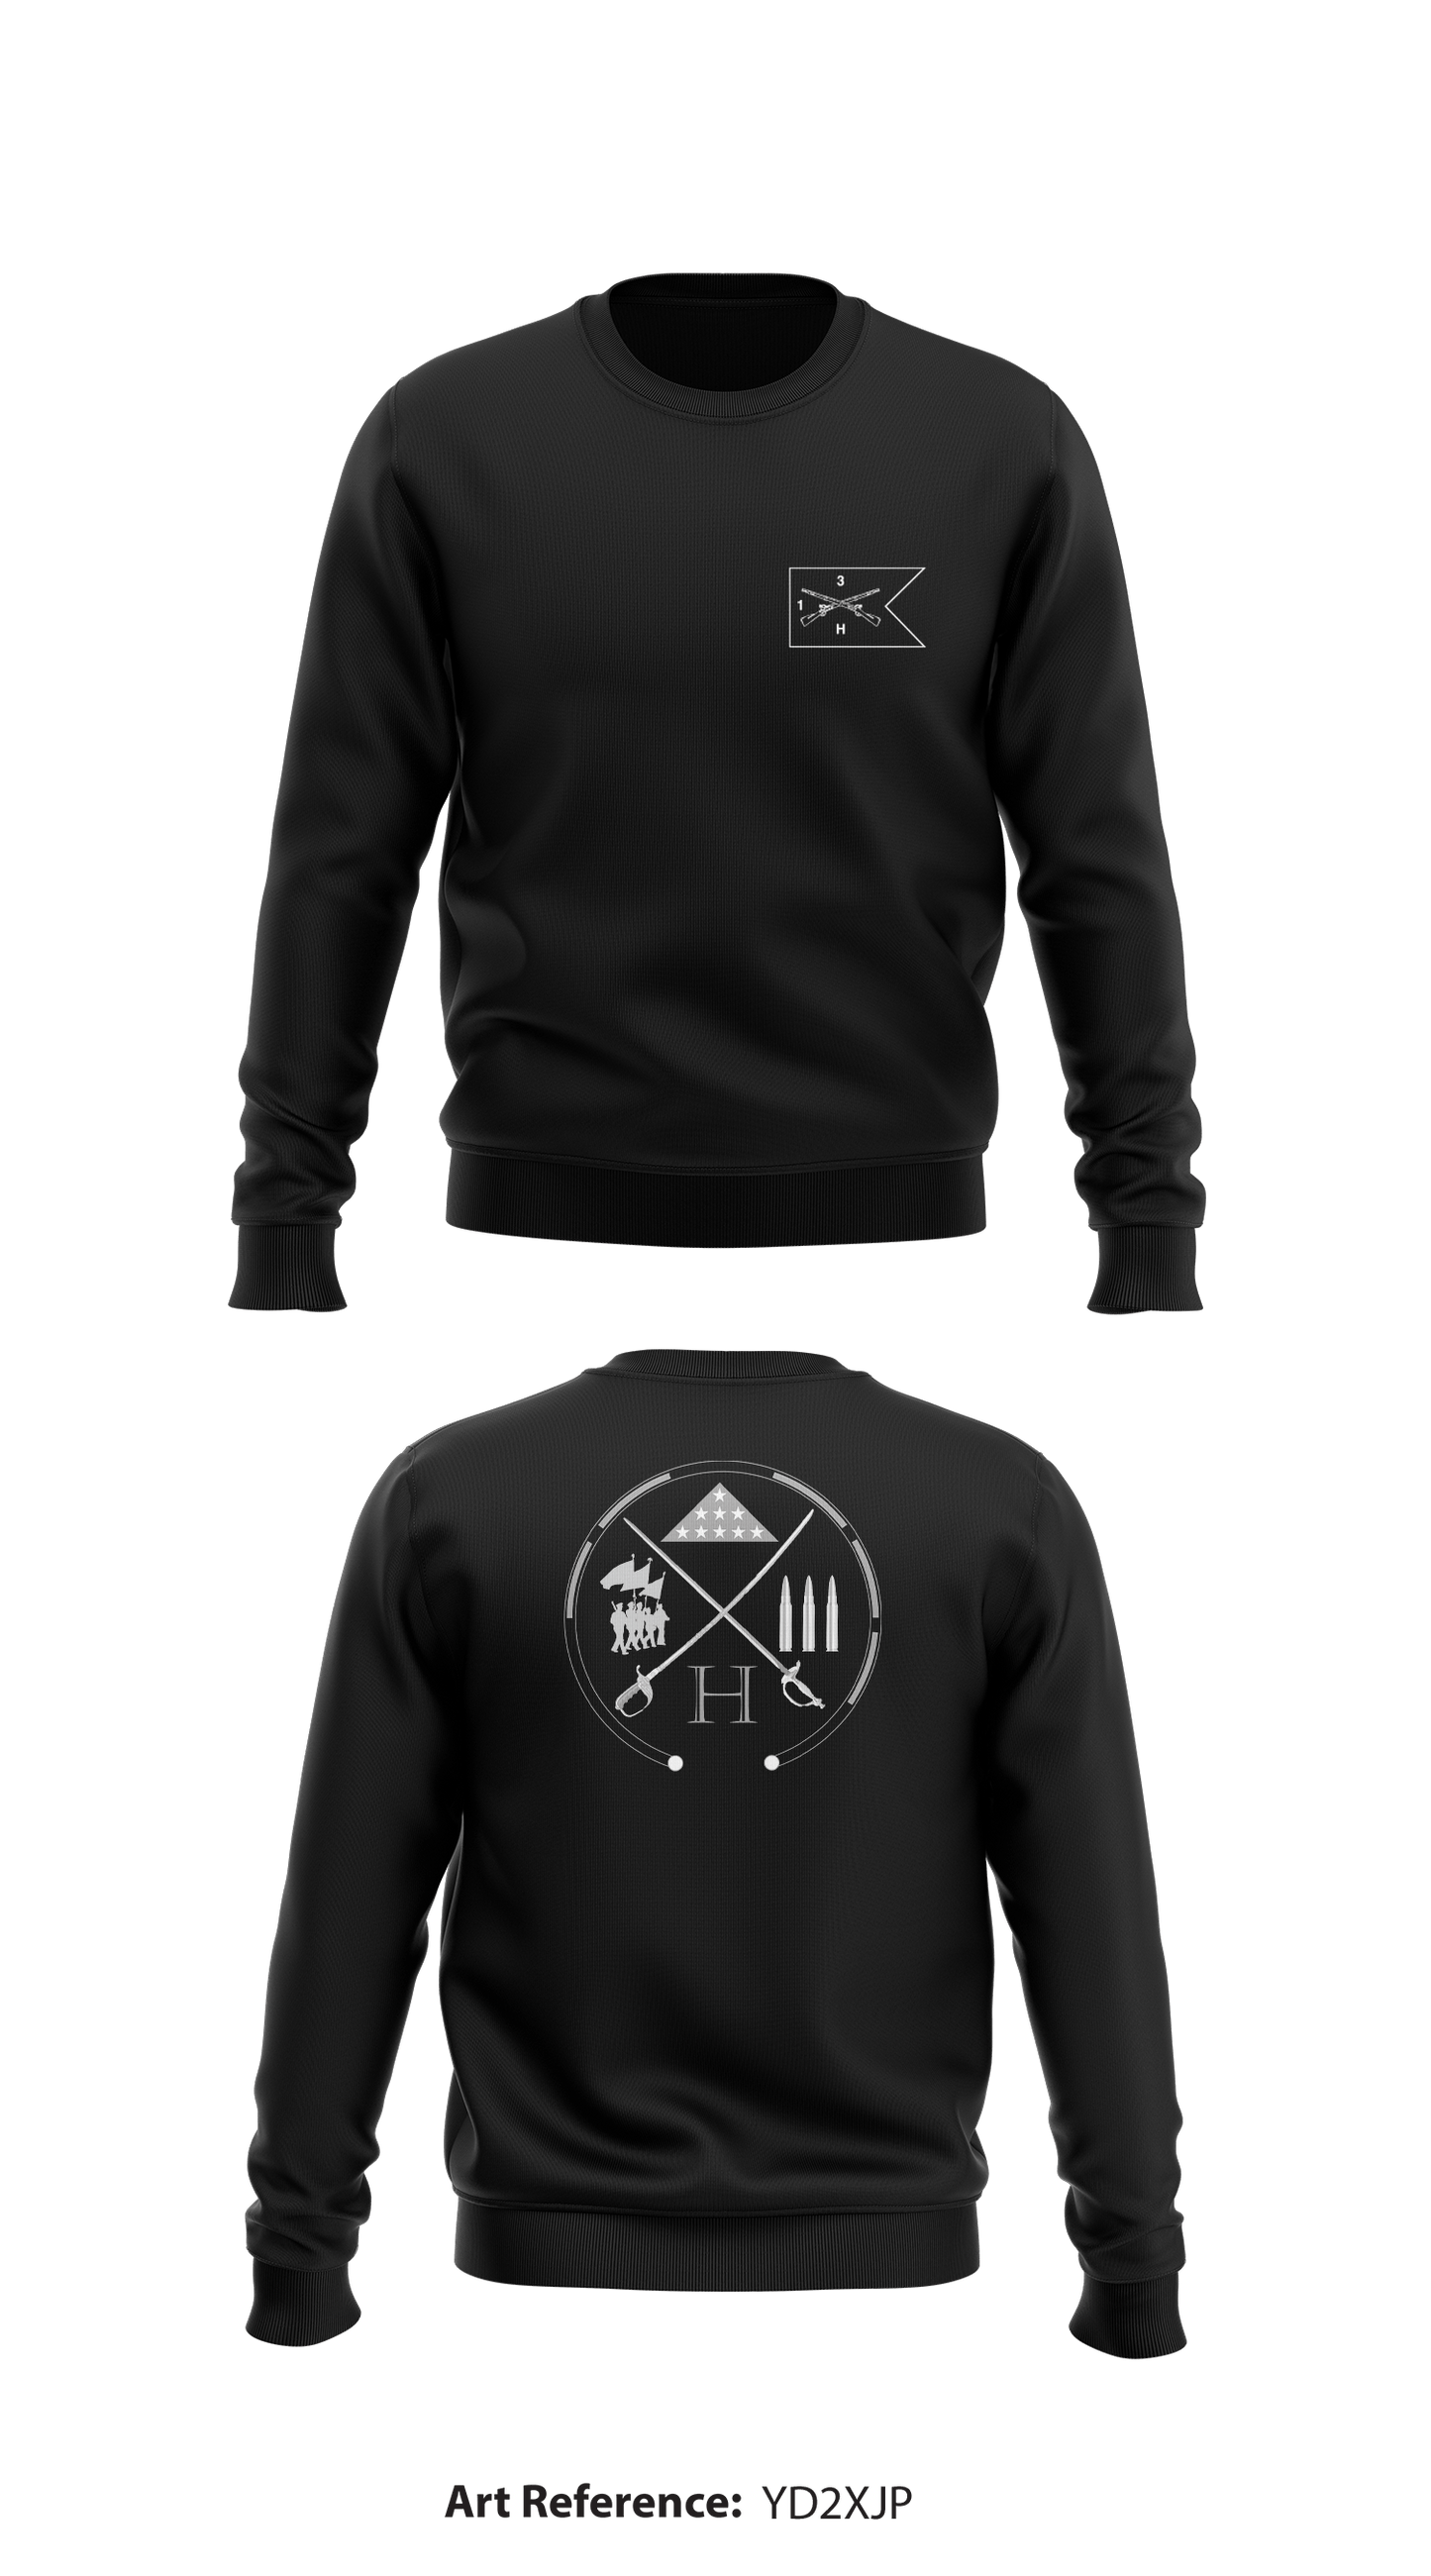 Hard Rock Company Store 1 Core Men's Crewneck Performance Sweatshirt - yd2XjP